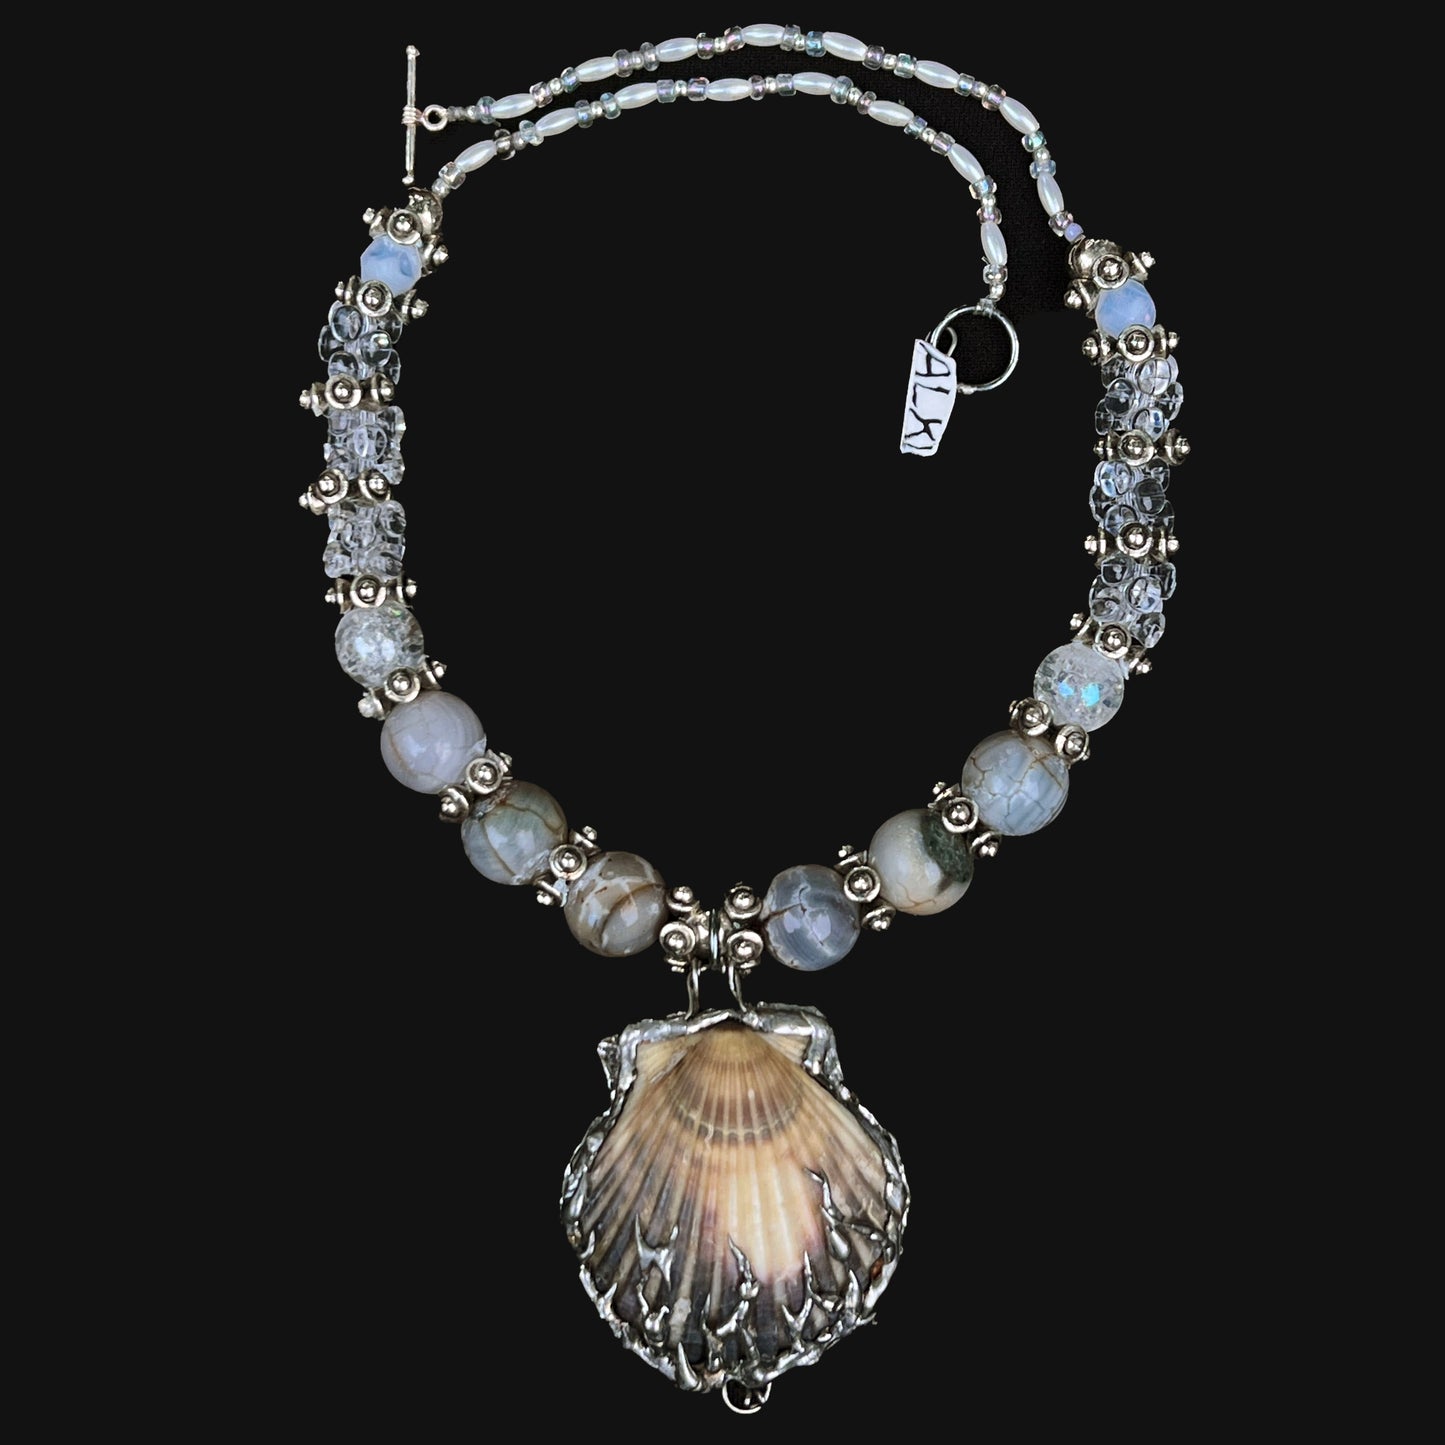 Venus’s locket - soldered shell necklace